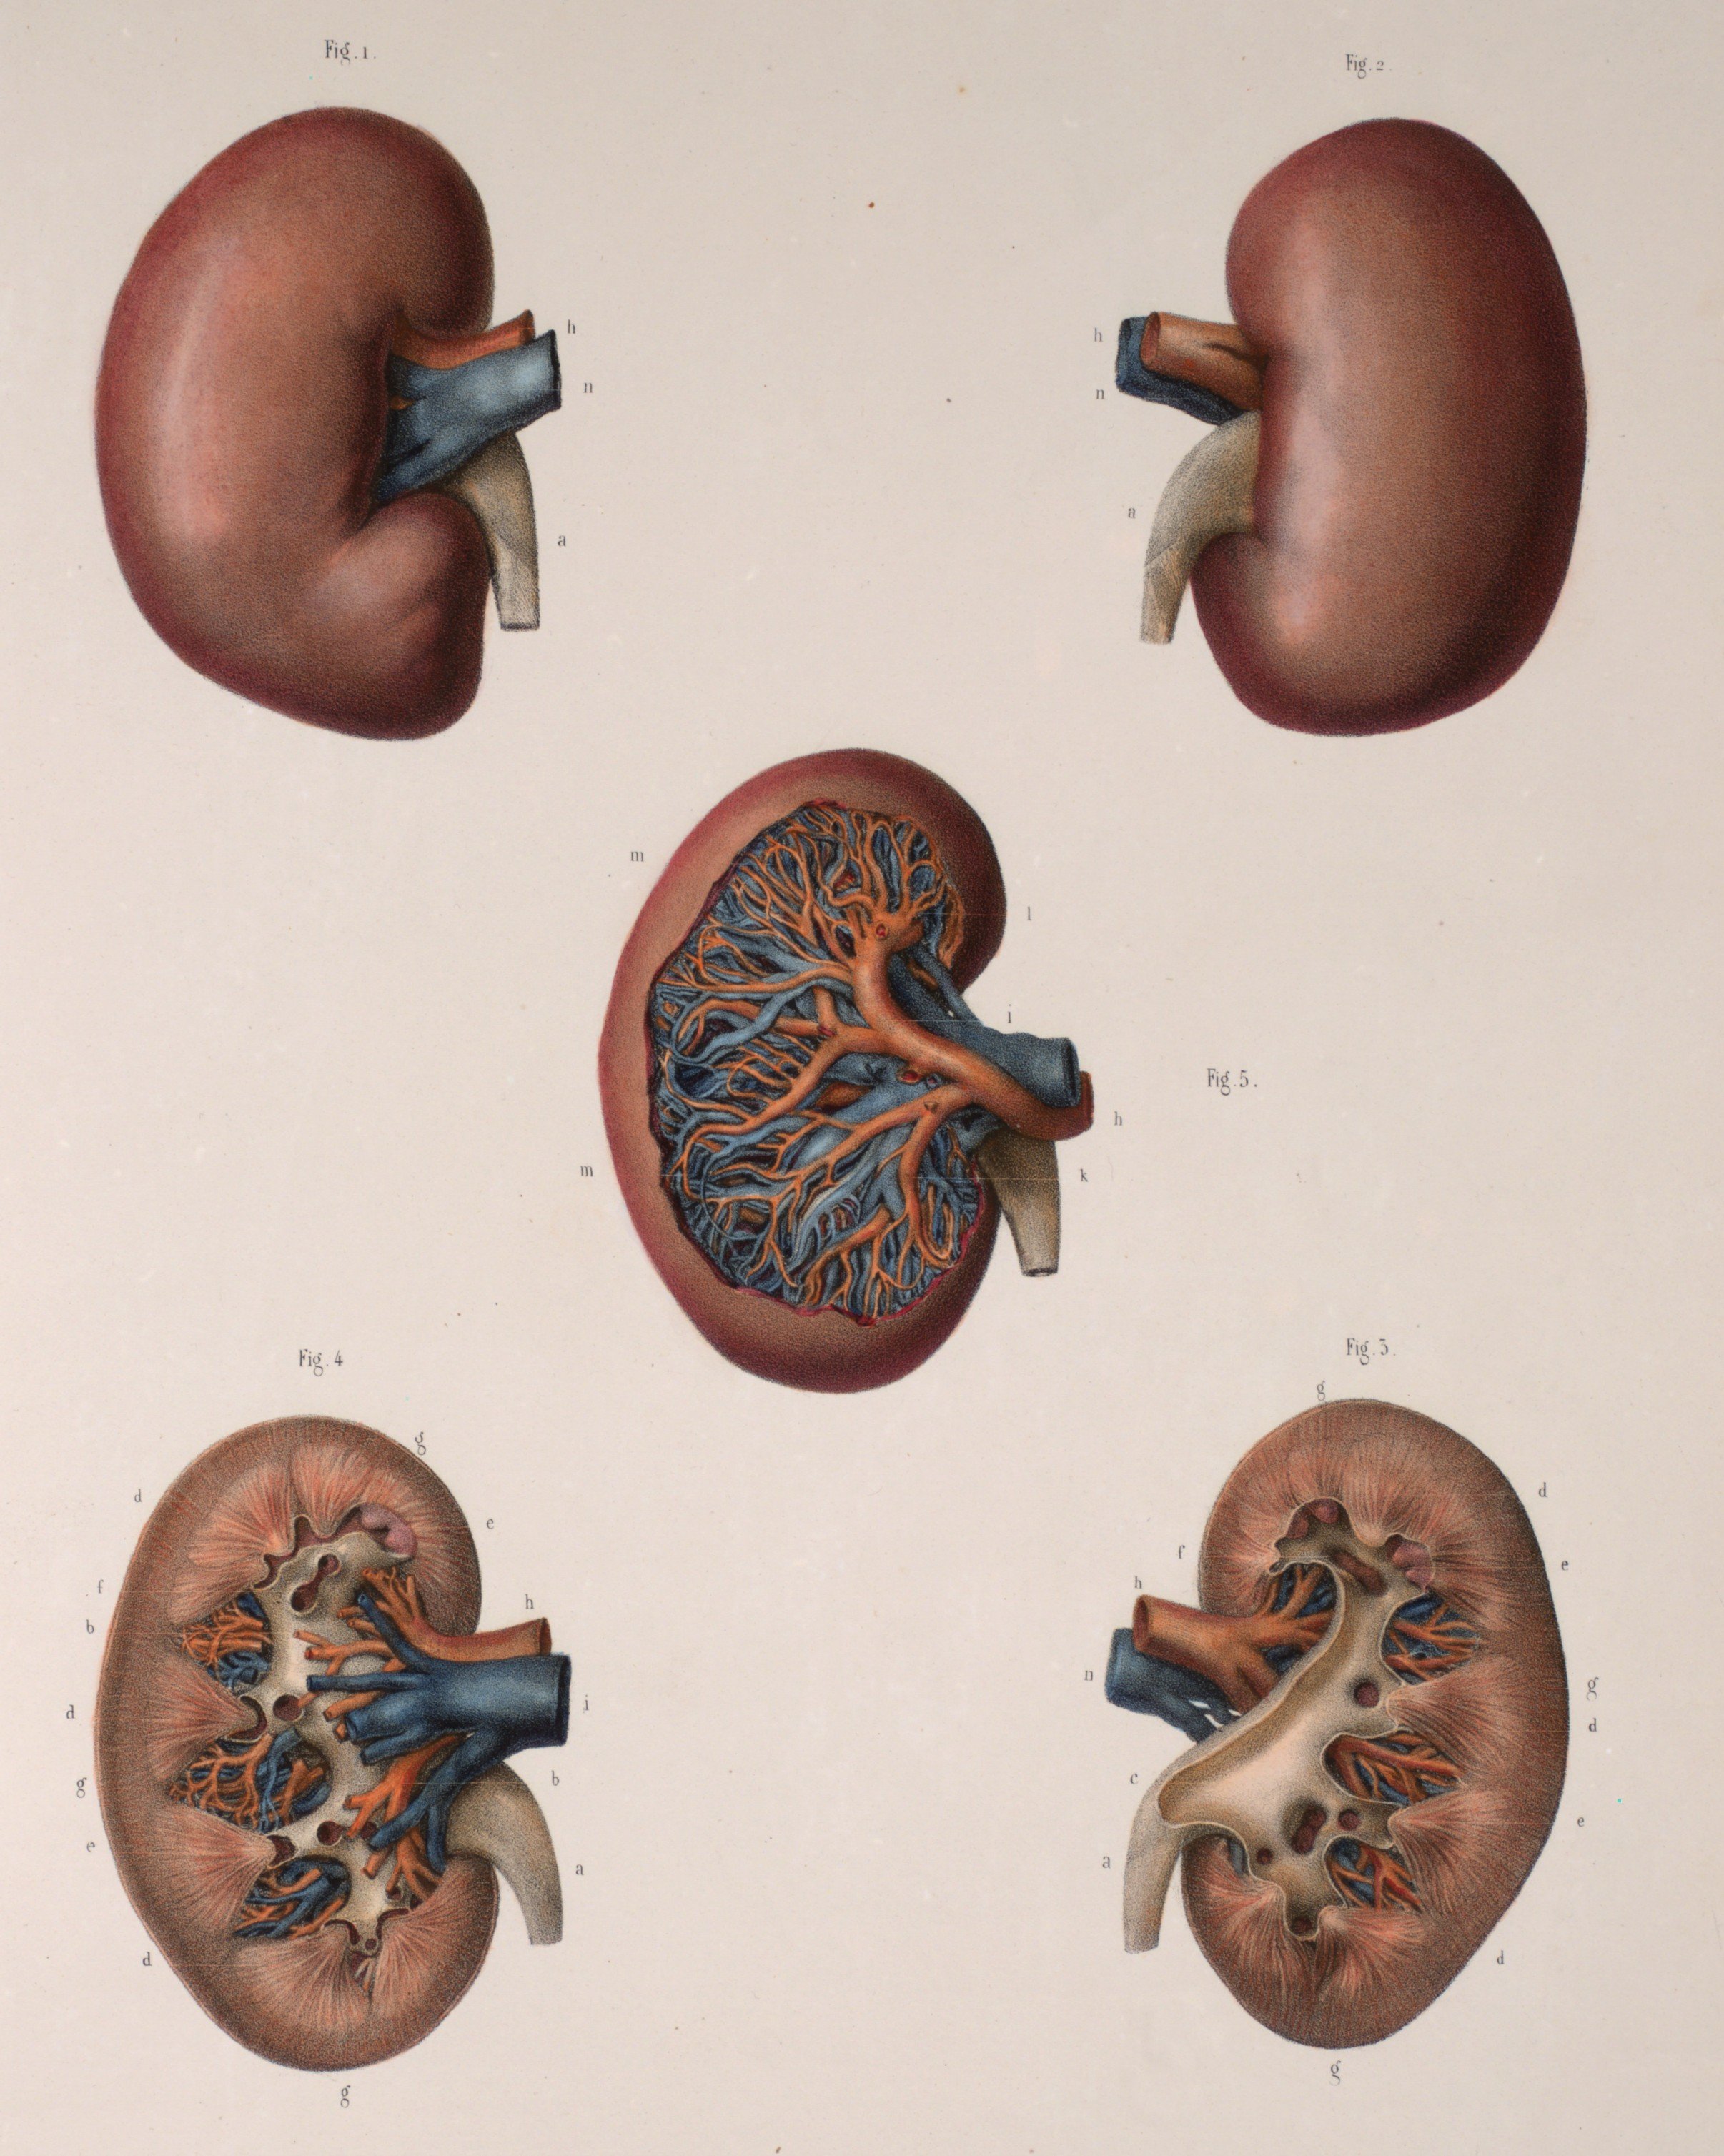 Kidneys.jpg